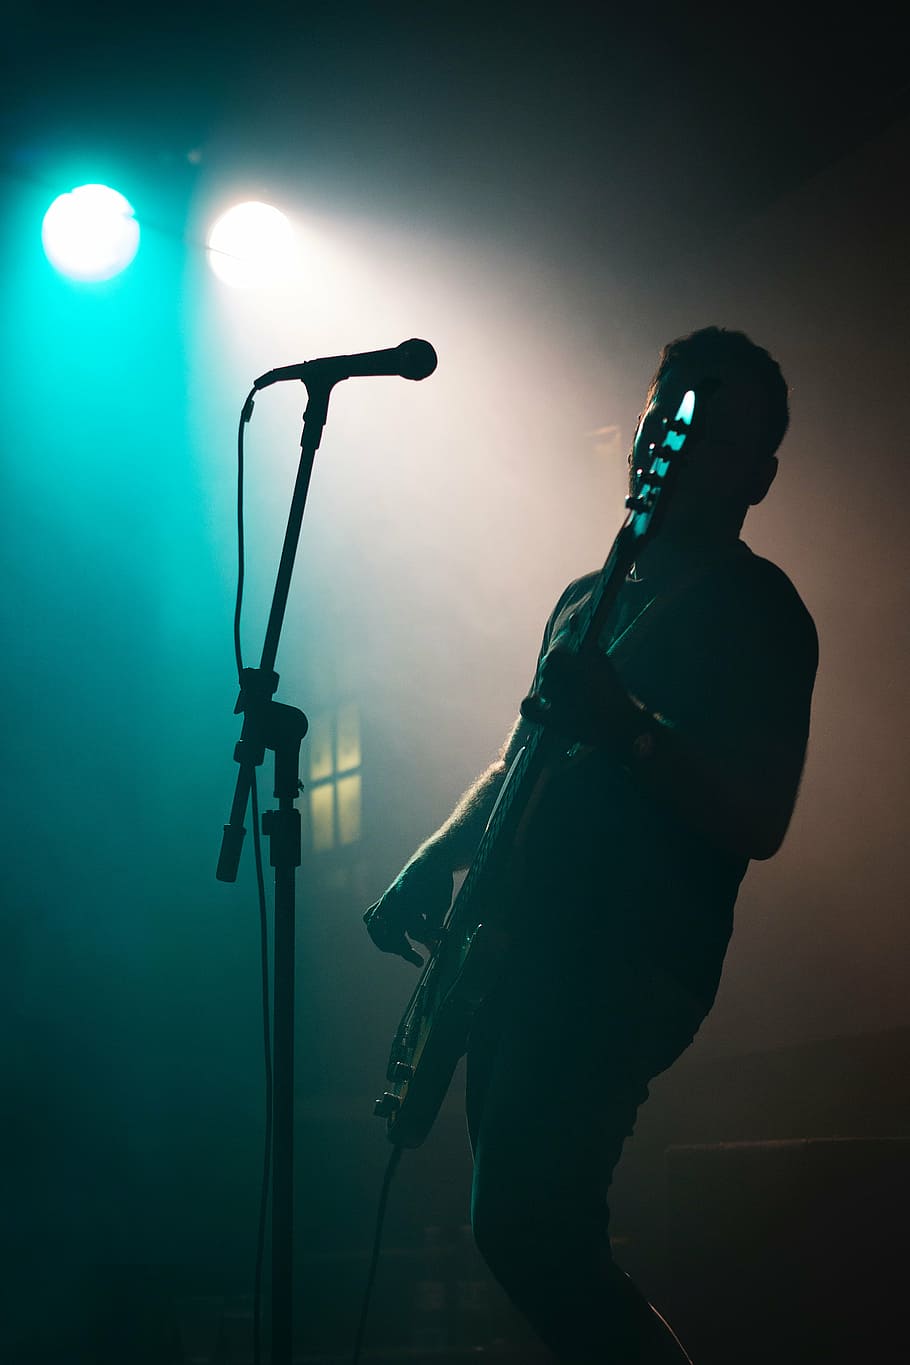 manusia, bermain, gitar bass, berdiri, depan, mikrofon, orang-orang, gitar, konser, lampu